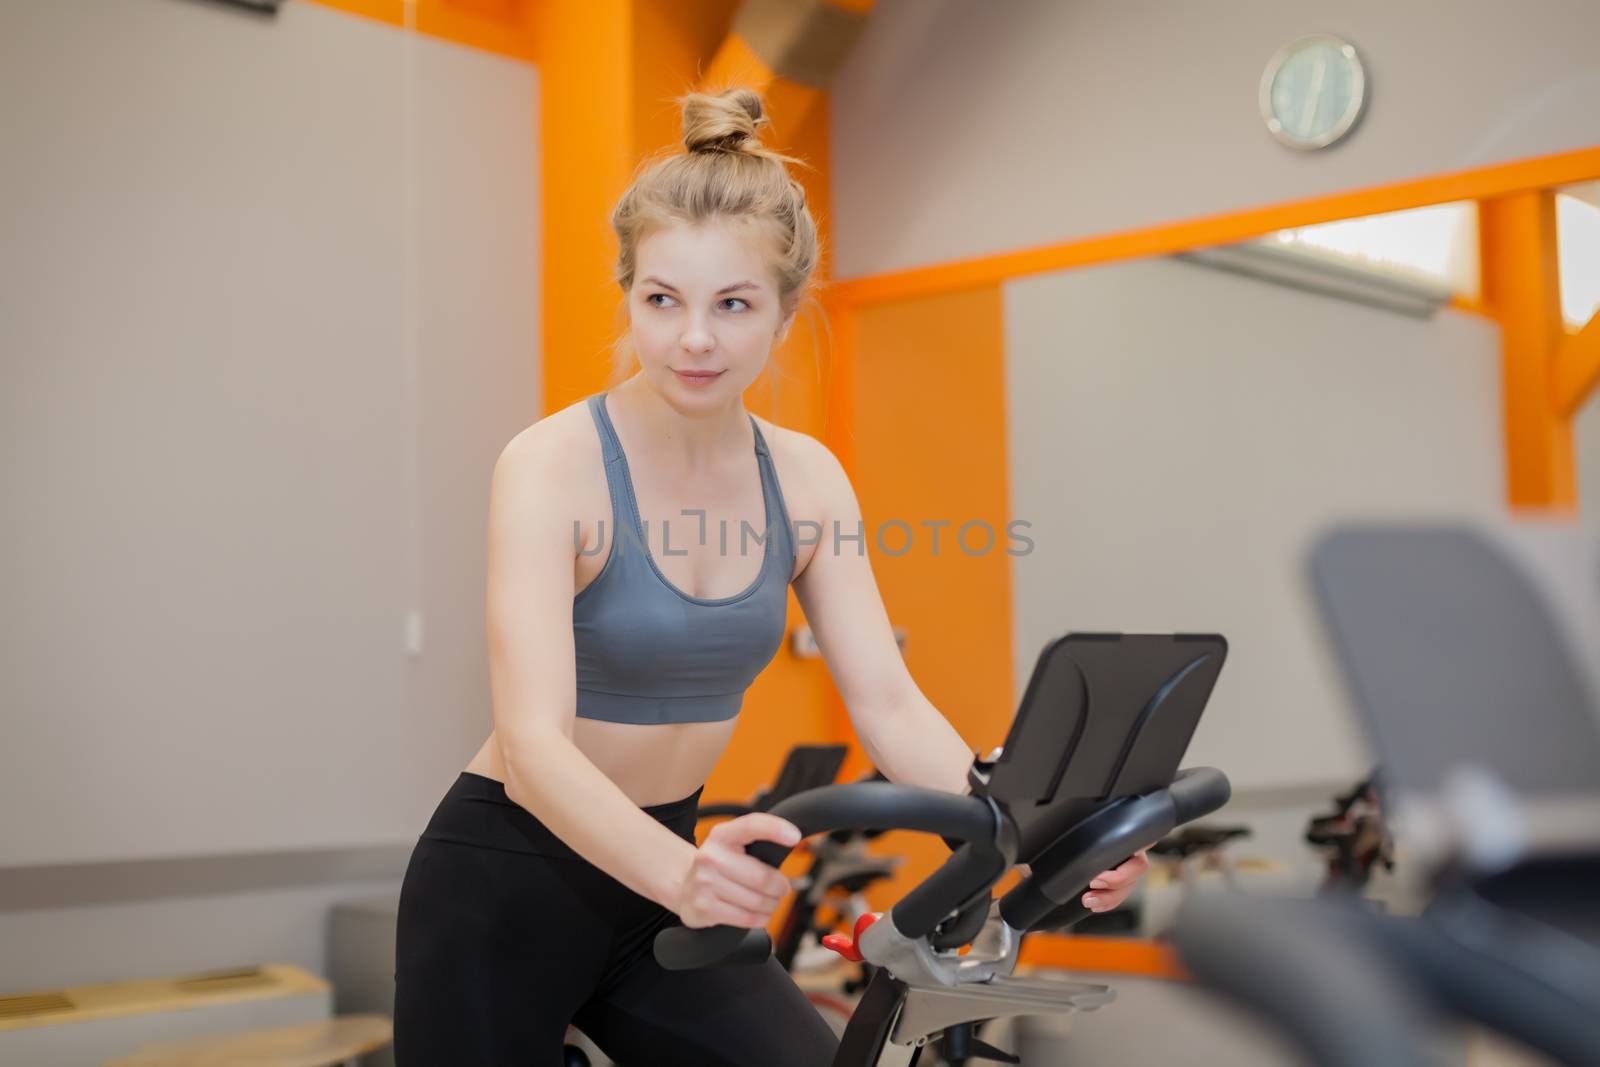 Woman doing cardio workout biking training in indoors gym